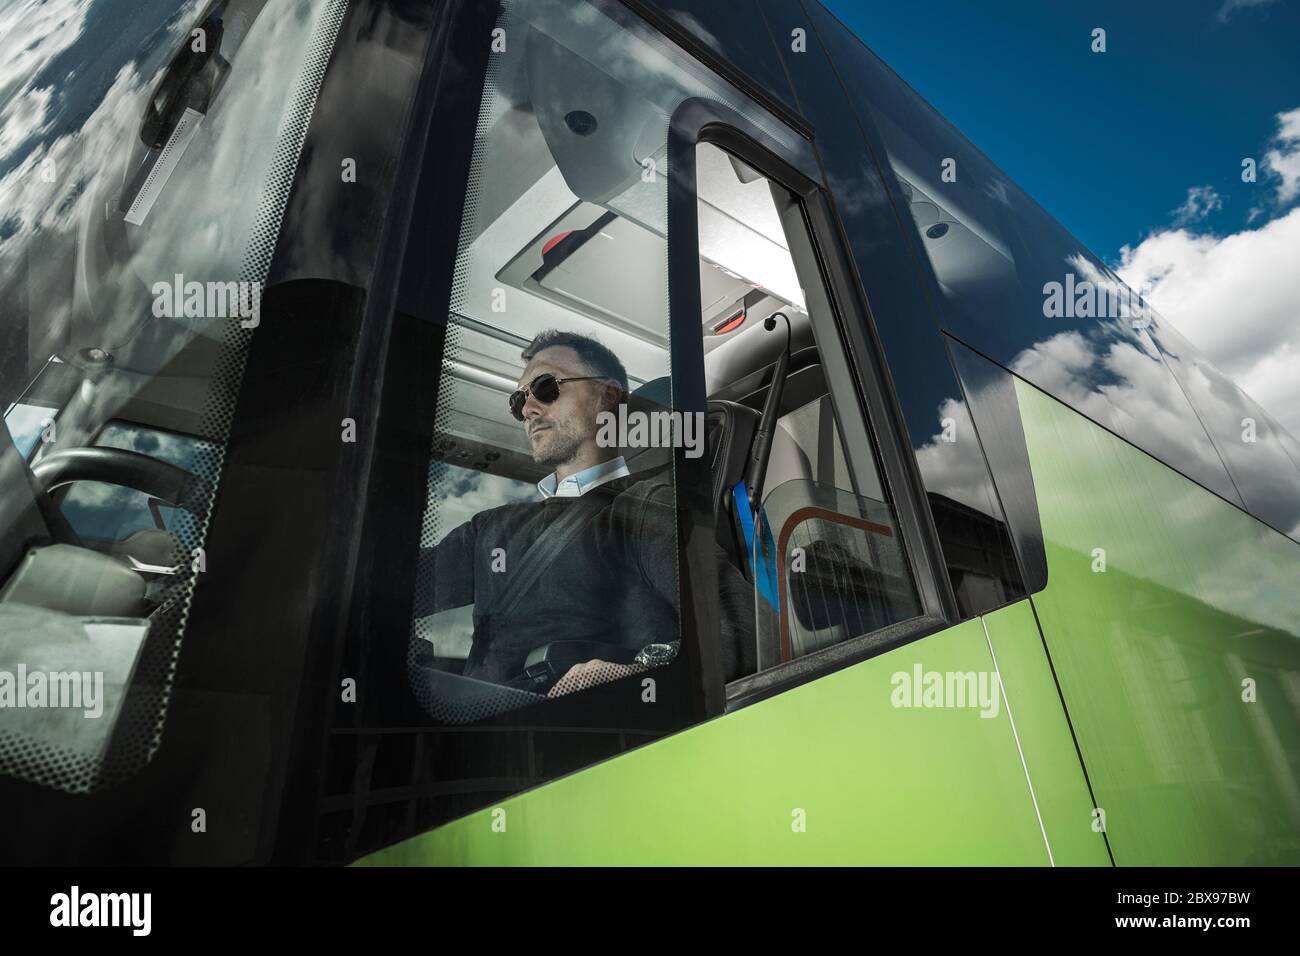 Moderne Bus Coach Driver Job. Kaukasische Männer Hinter Internationalen Bus Lenkrad. Thema Transportbranche. Stockfoto